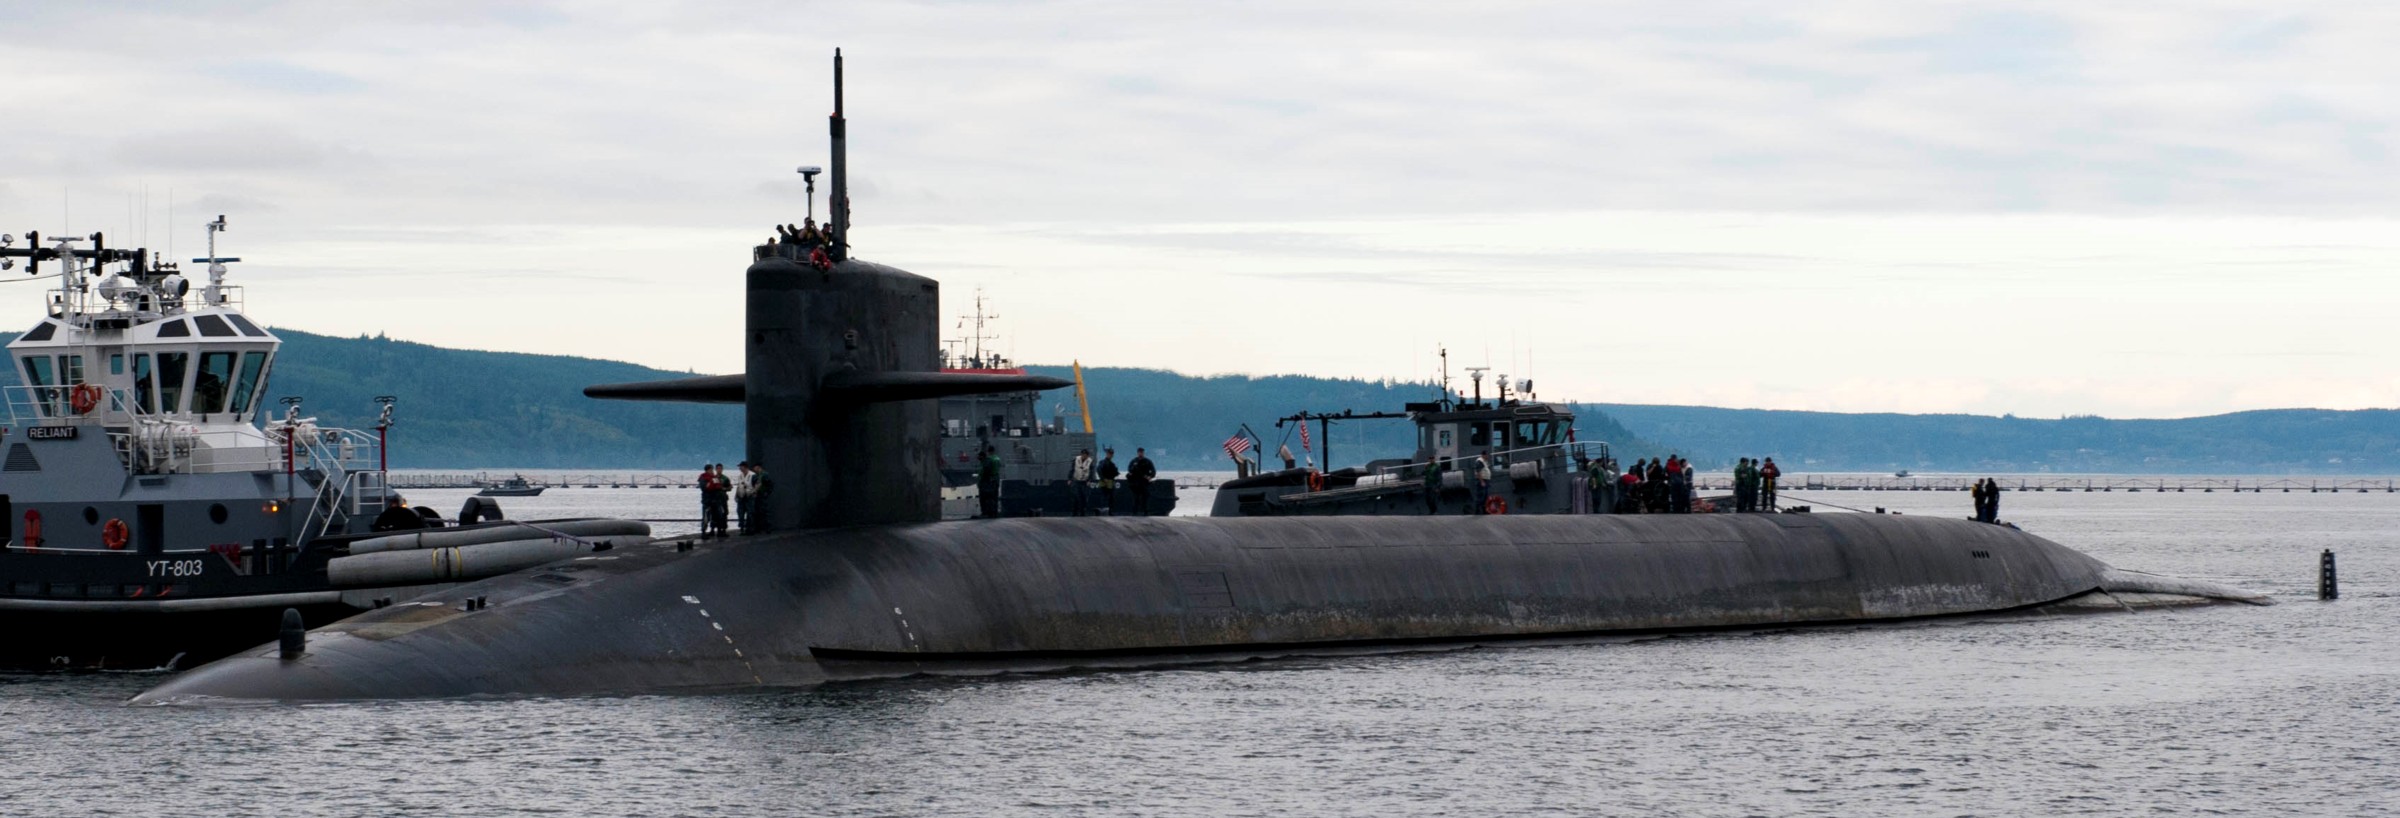 ssbn-731 uss alabama ohio class ballistic missile submarine 2016 07 naval base kitsap bangor bremerton washington